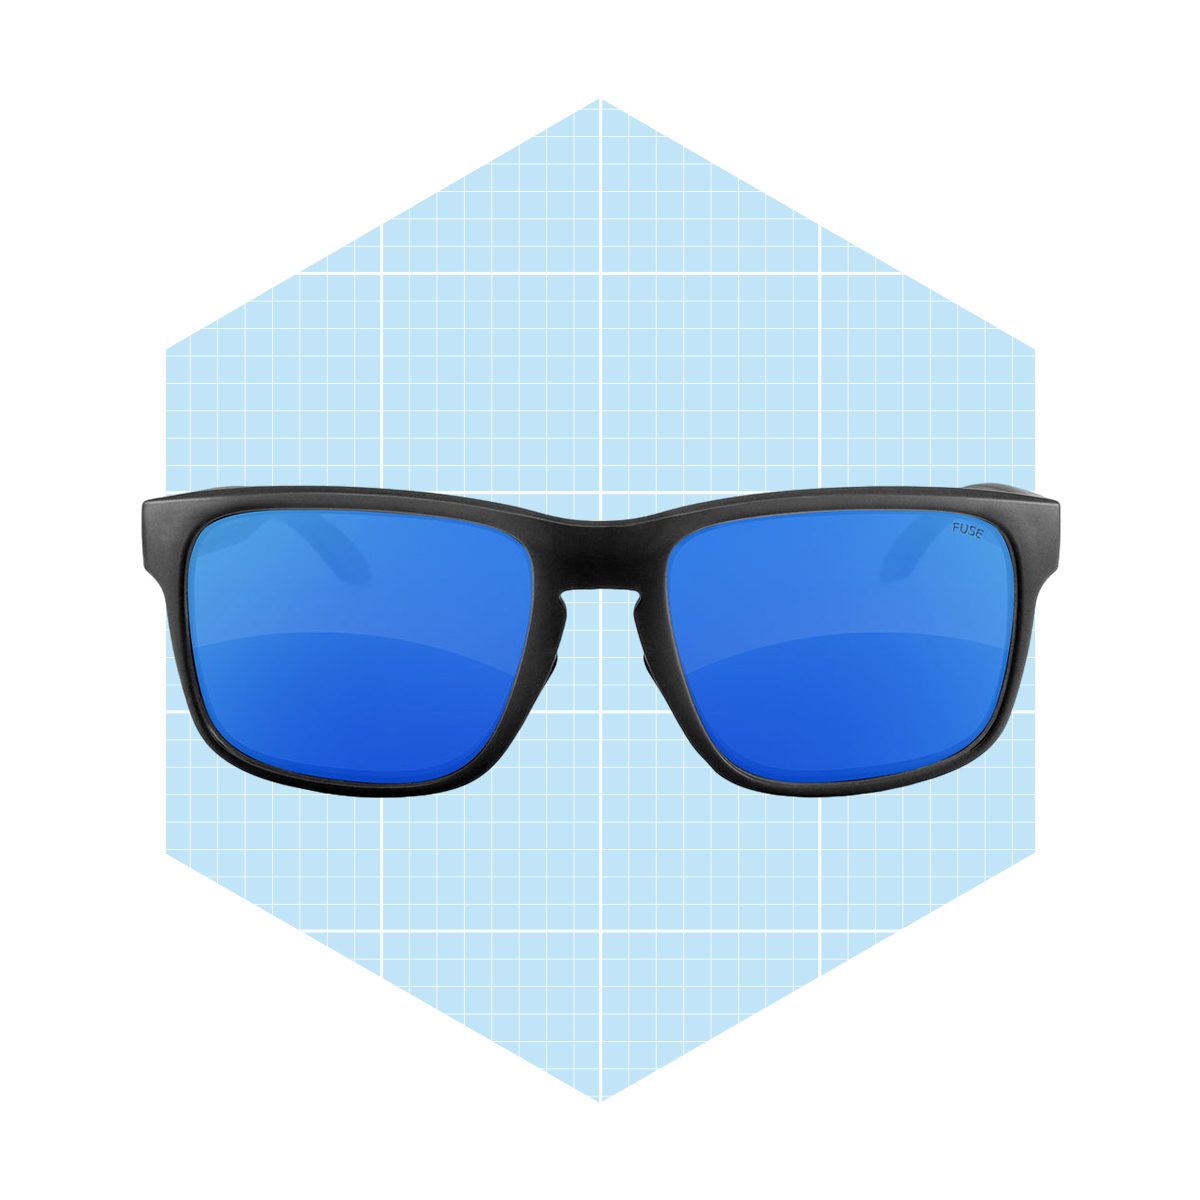 5 Best Polarized Sunglasses To Reduce Glare And Improve Clarity